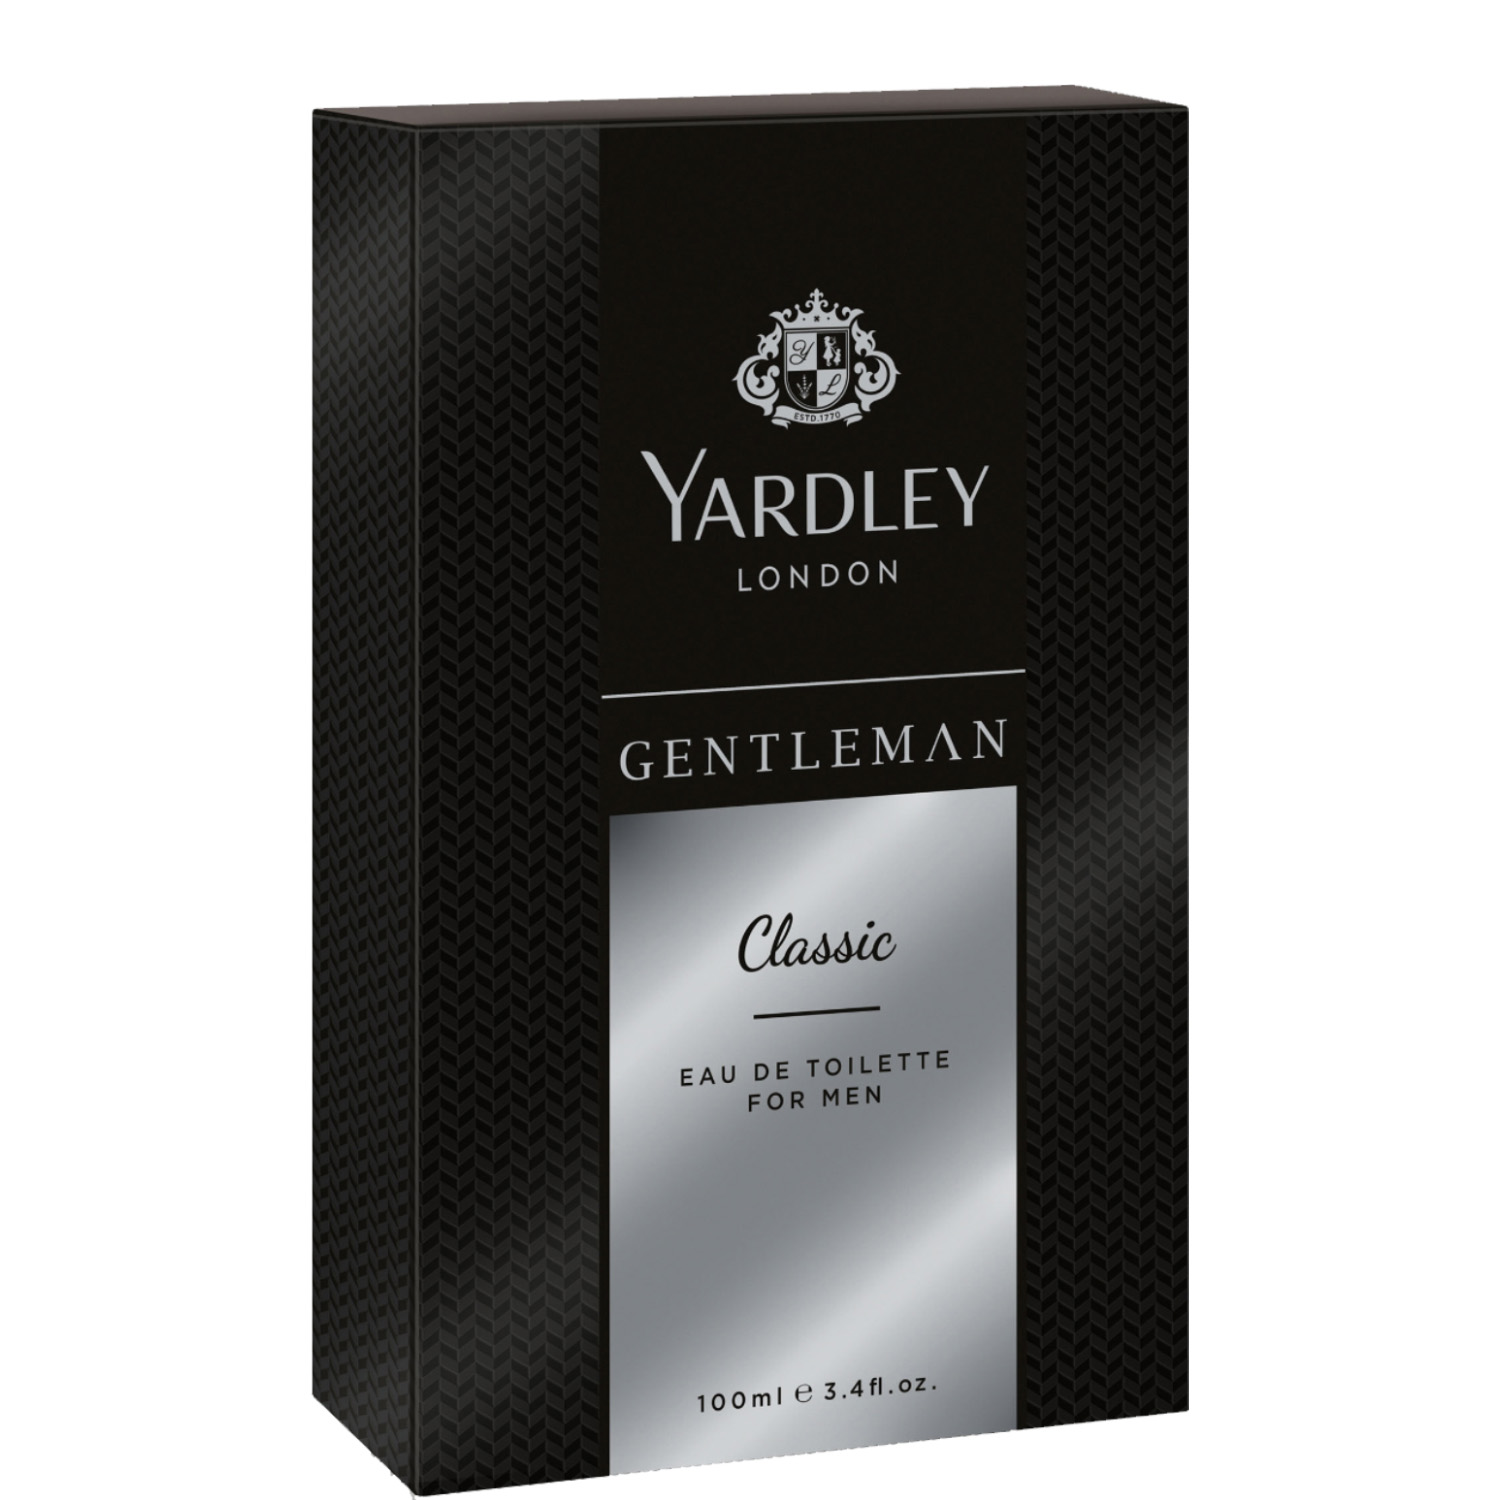 Yardley Gentleman Classic Eau de Toilette 100ml